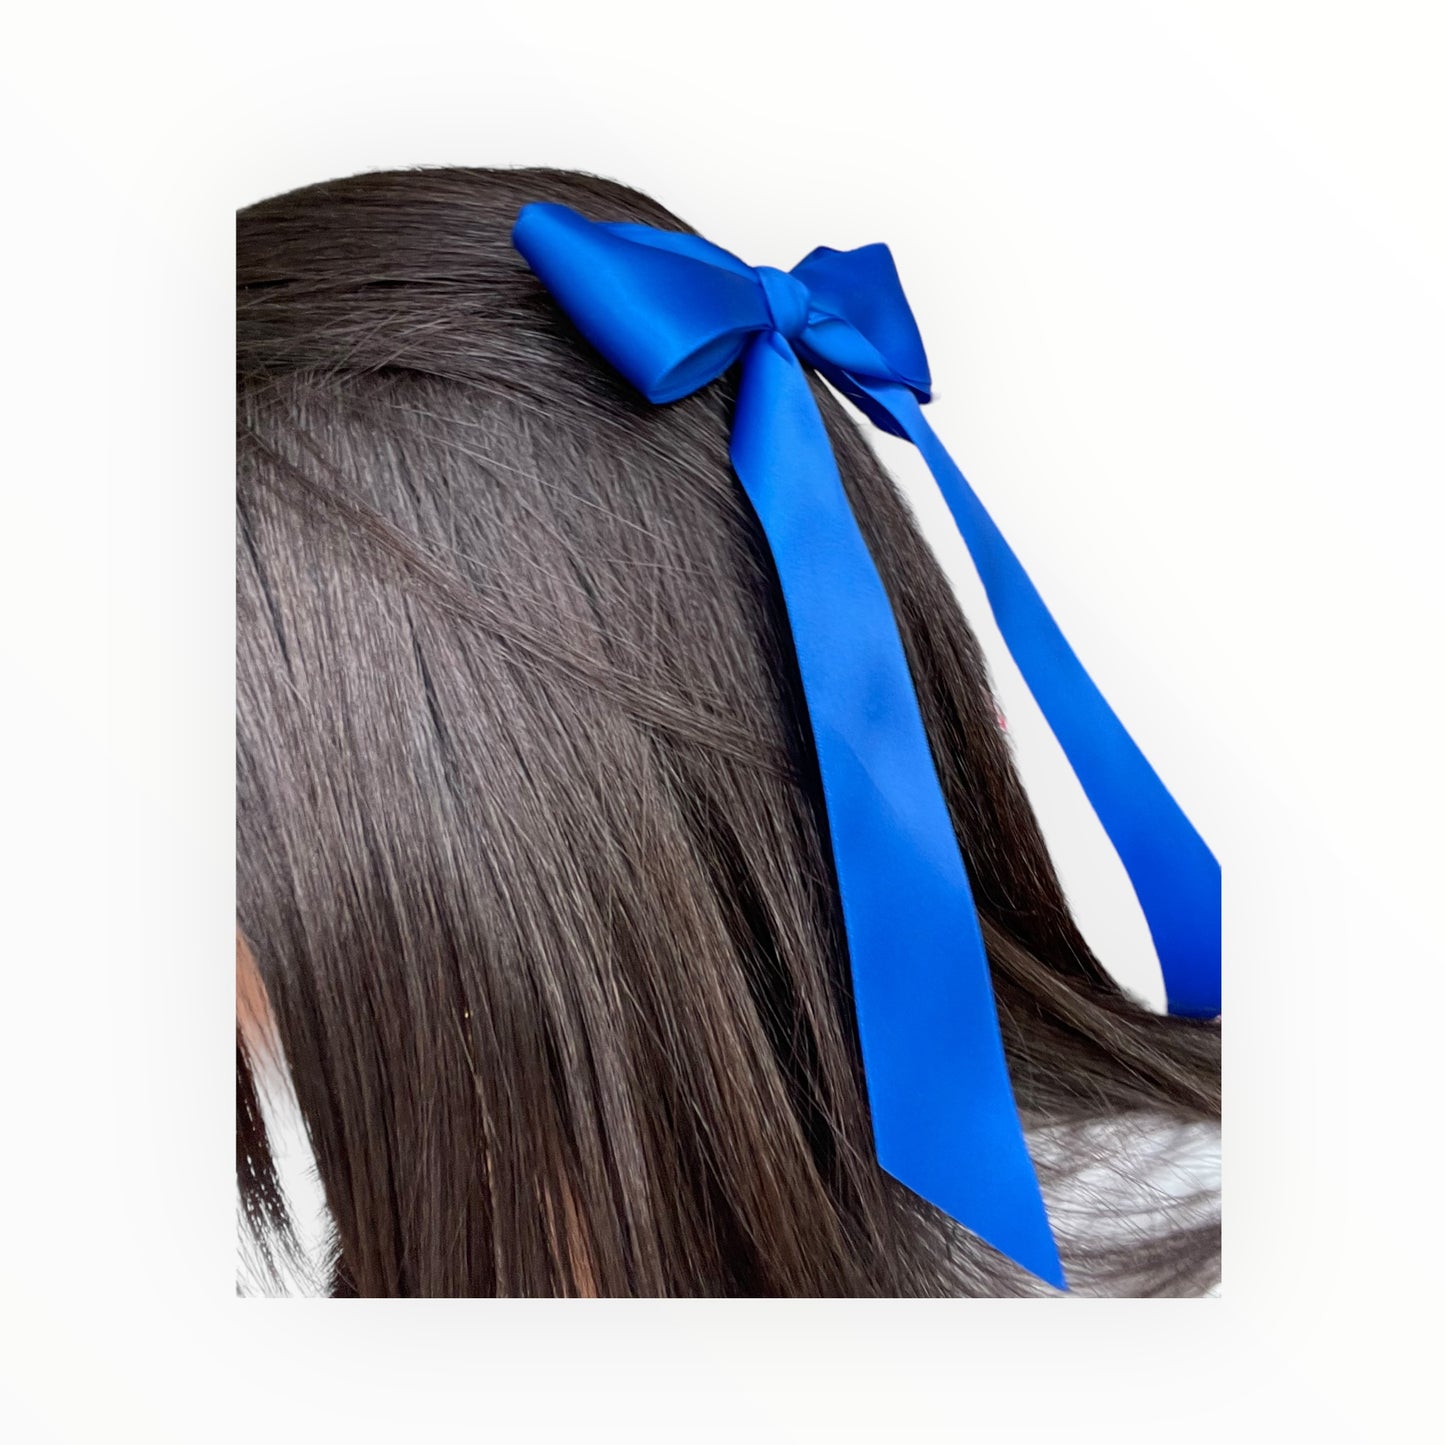 Coquette hair bow  Hair accessories. Hair clip accessories  Choose your colors